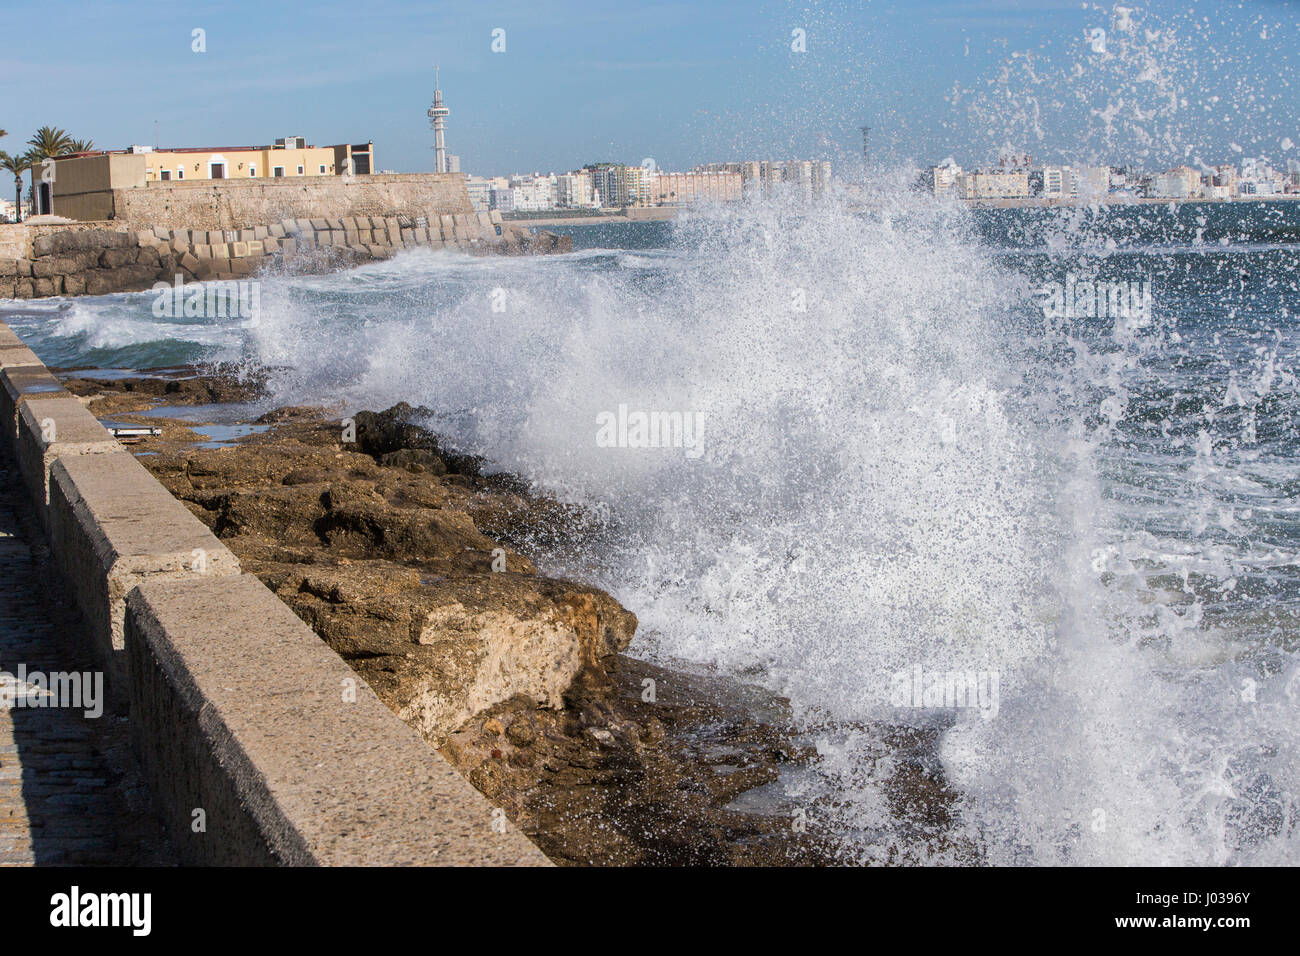 Waves hit the rocks on the promenade of the La Caleta beach in Cadiz, Spain Stock Photo